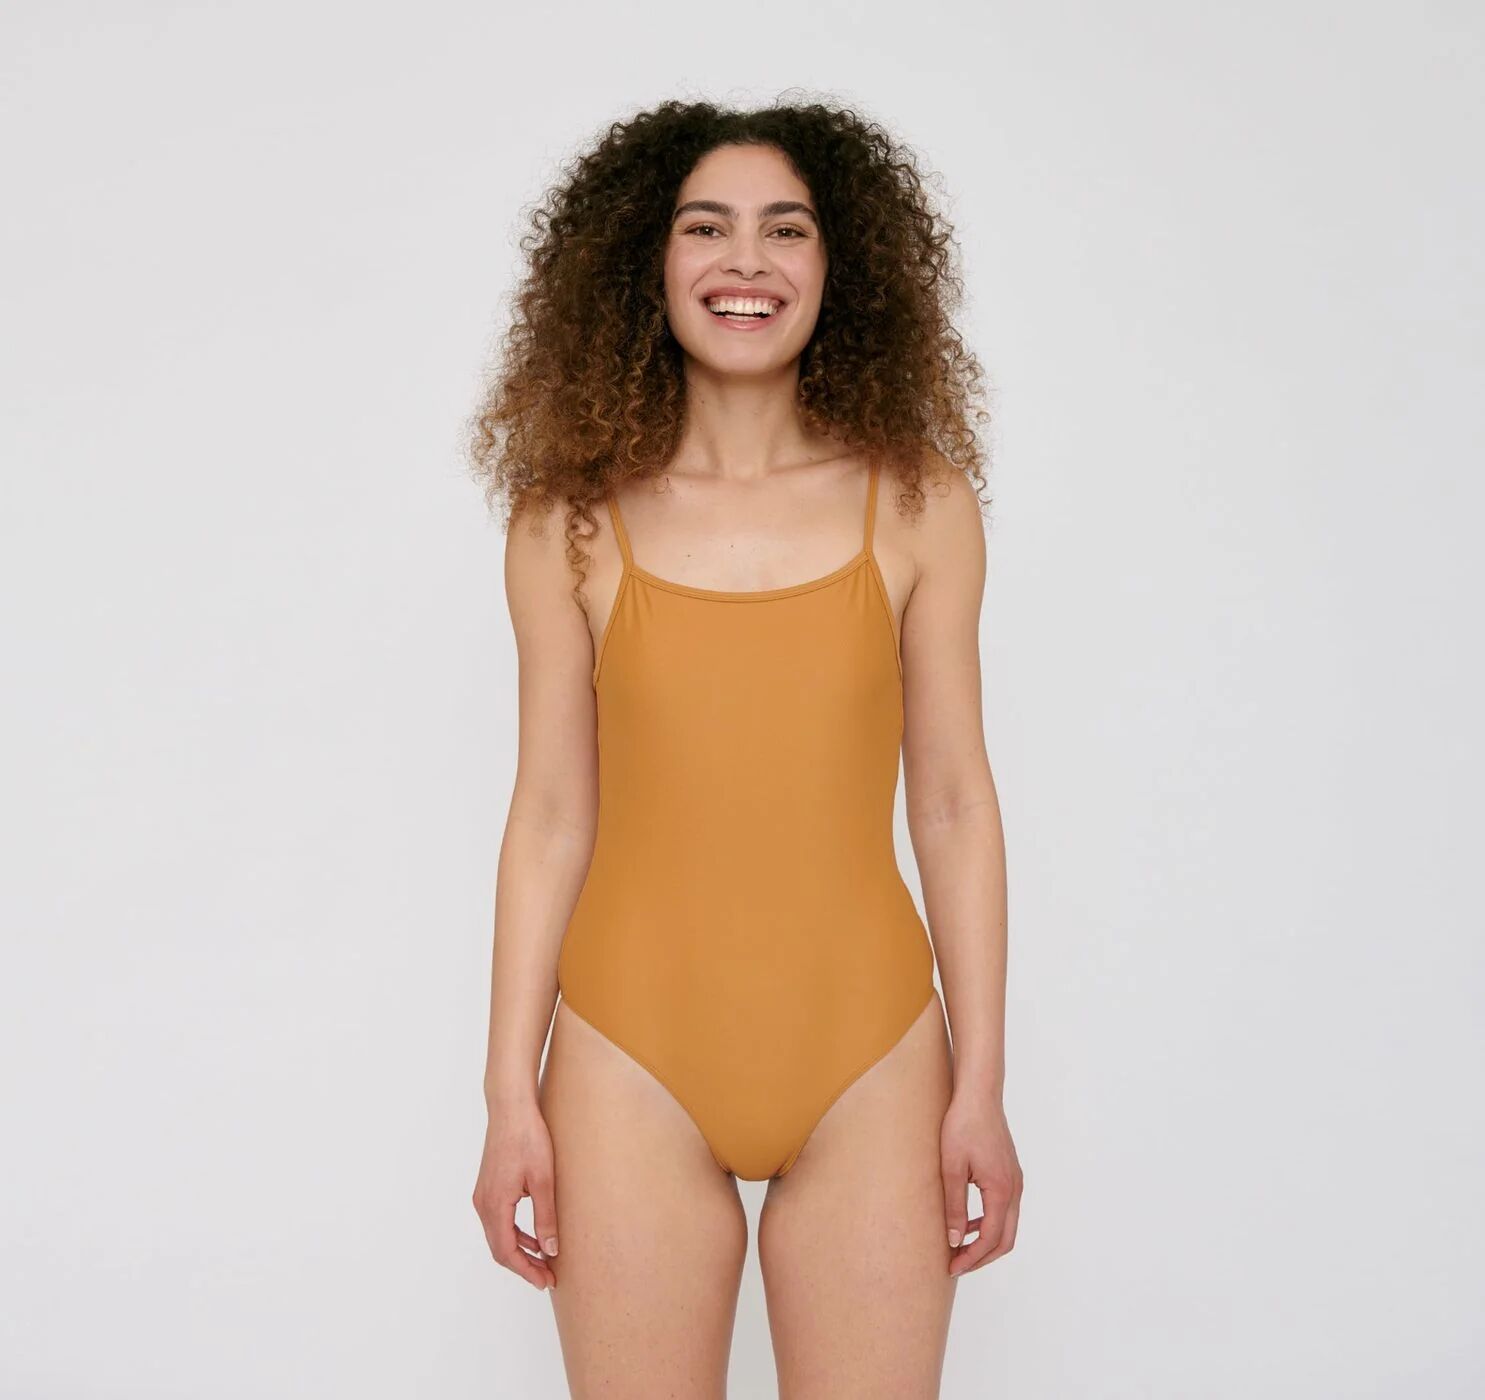 Organic Basics Women's Re-Swim One-Piece -  Recycled Nylon, Ocher / XL